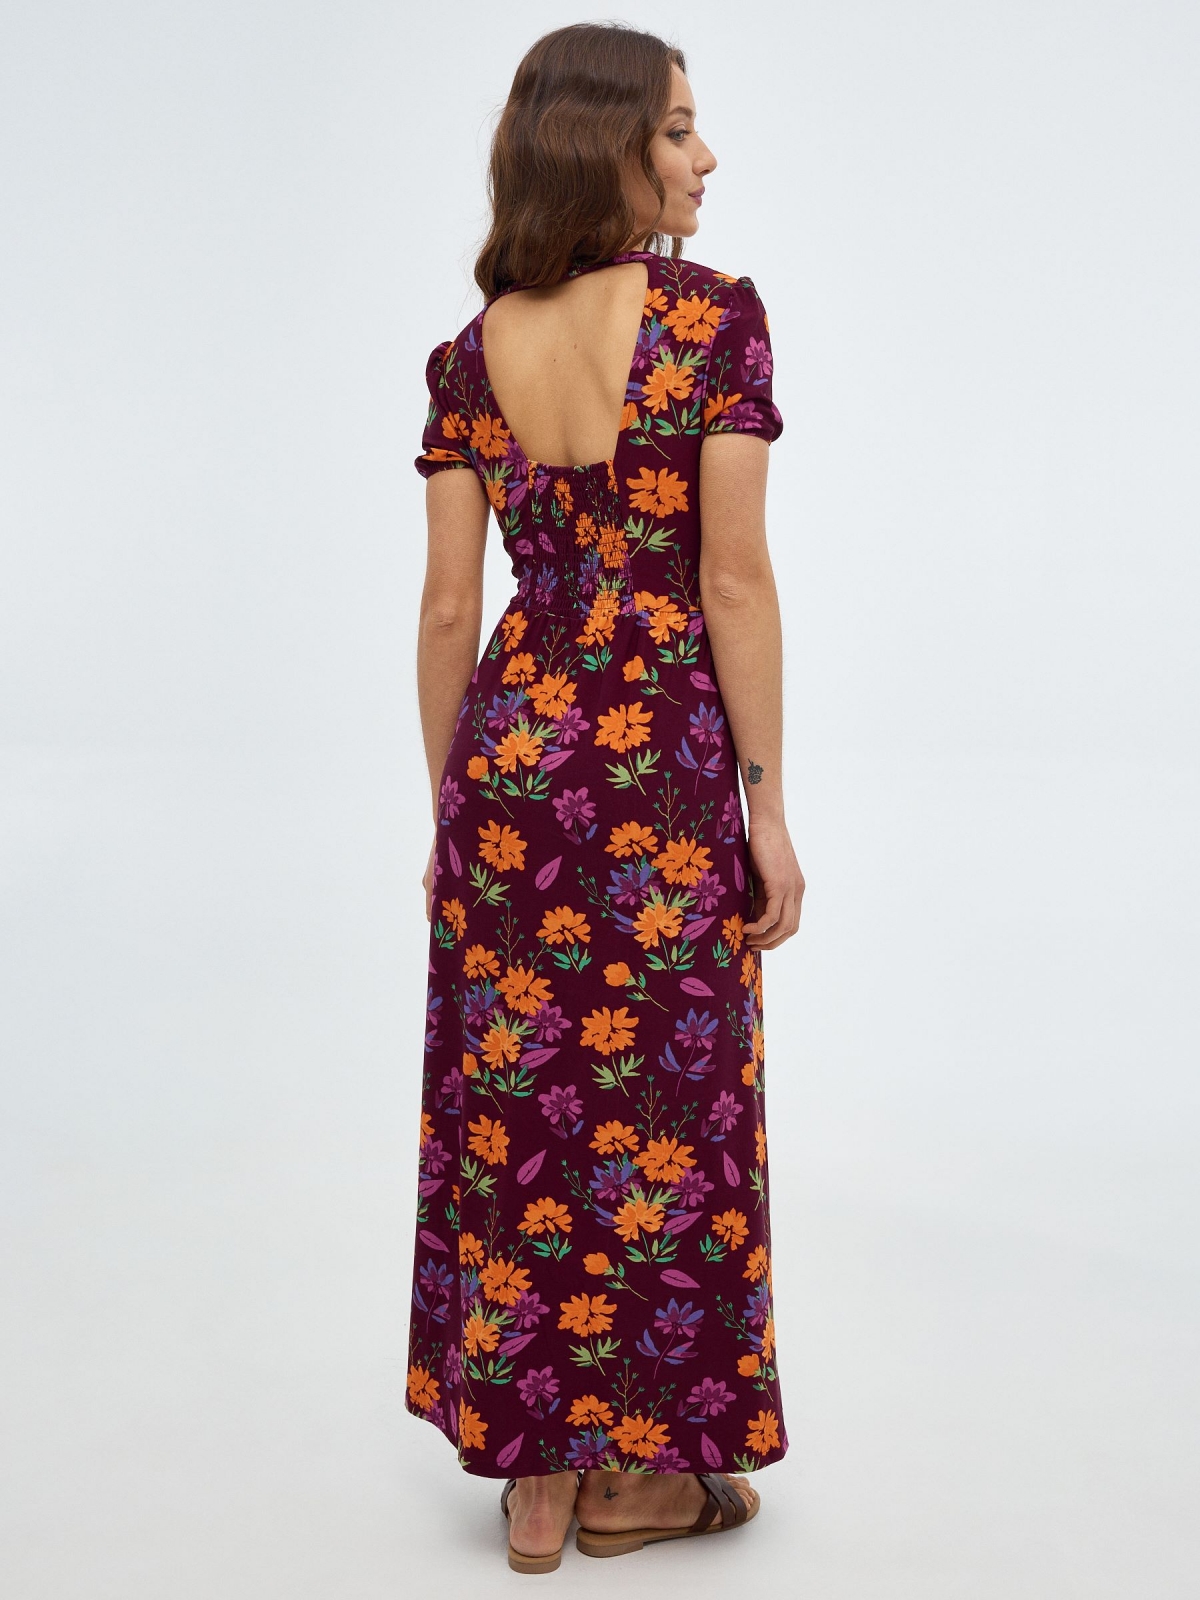 Flower print maxi dress aubergine middle back view